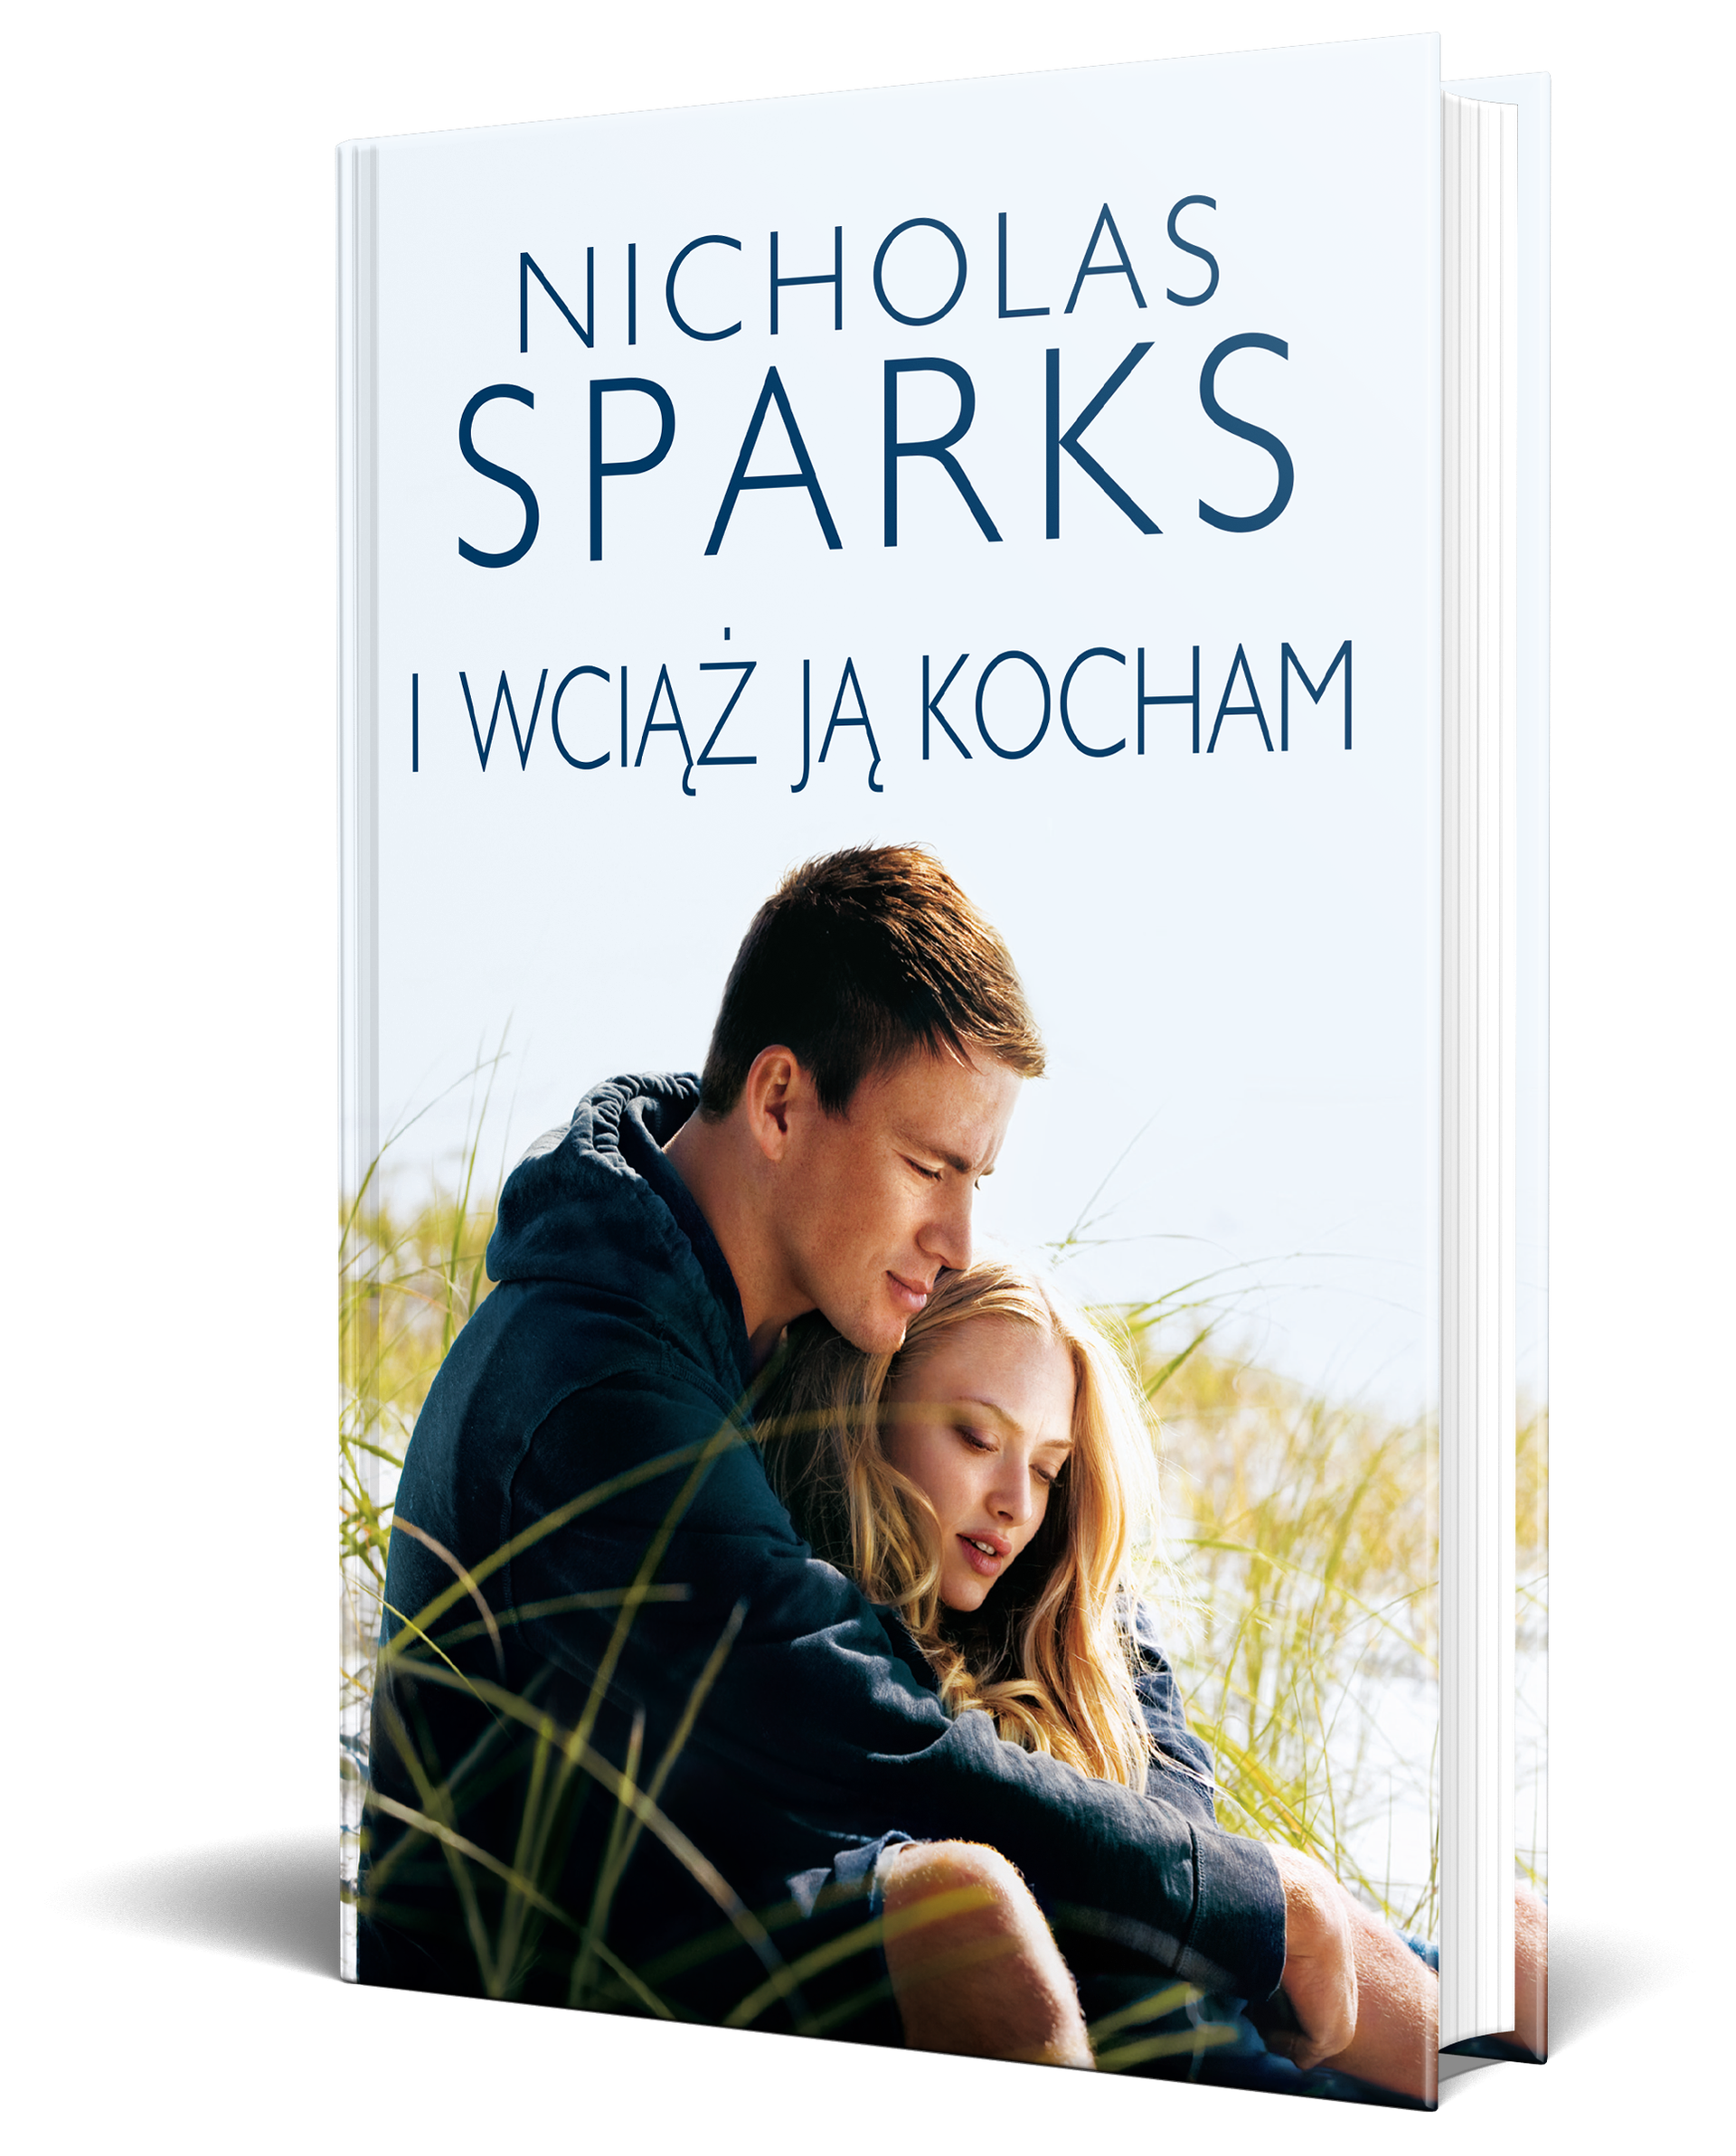 Nicholas Sparks Podpisywalem Dziewczynie Ksiazke I Nagle Jej Chlopak Padl Na Kolana Wp Ksiazki